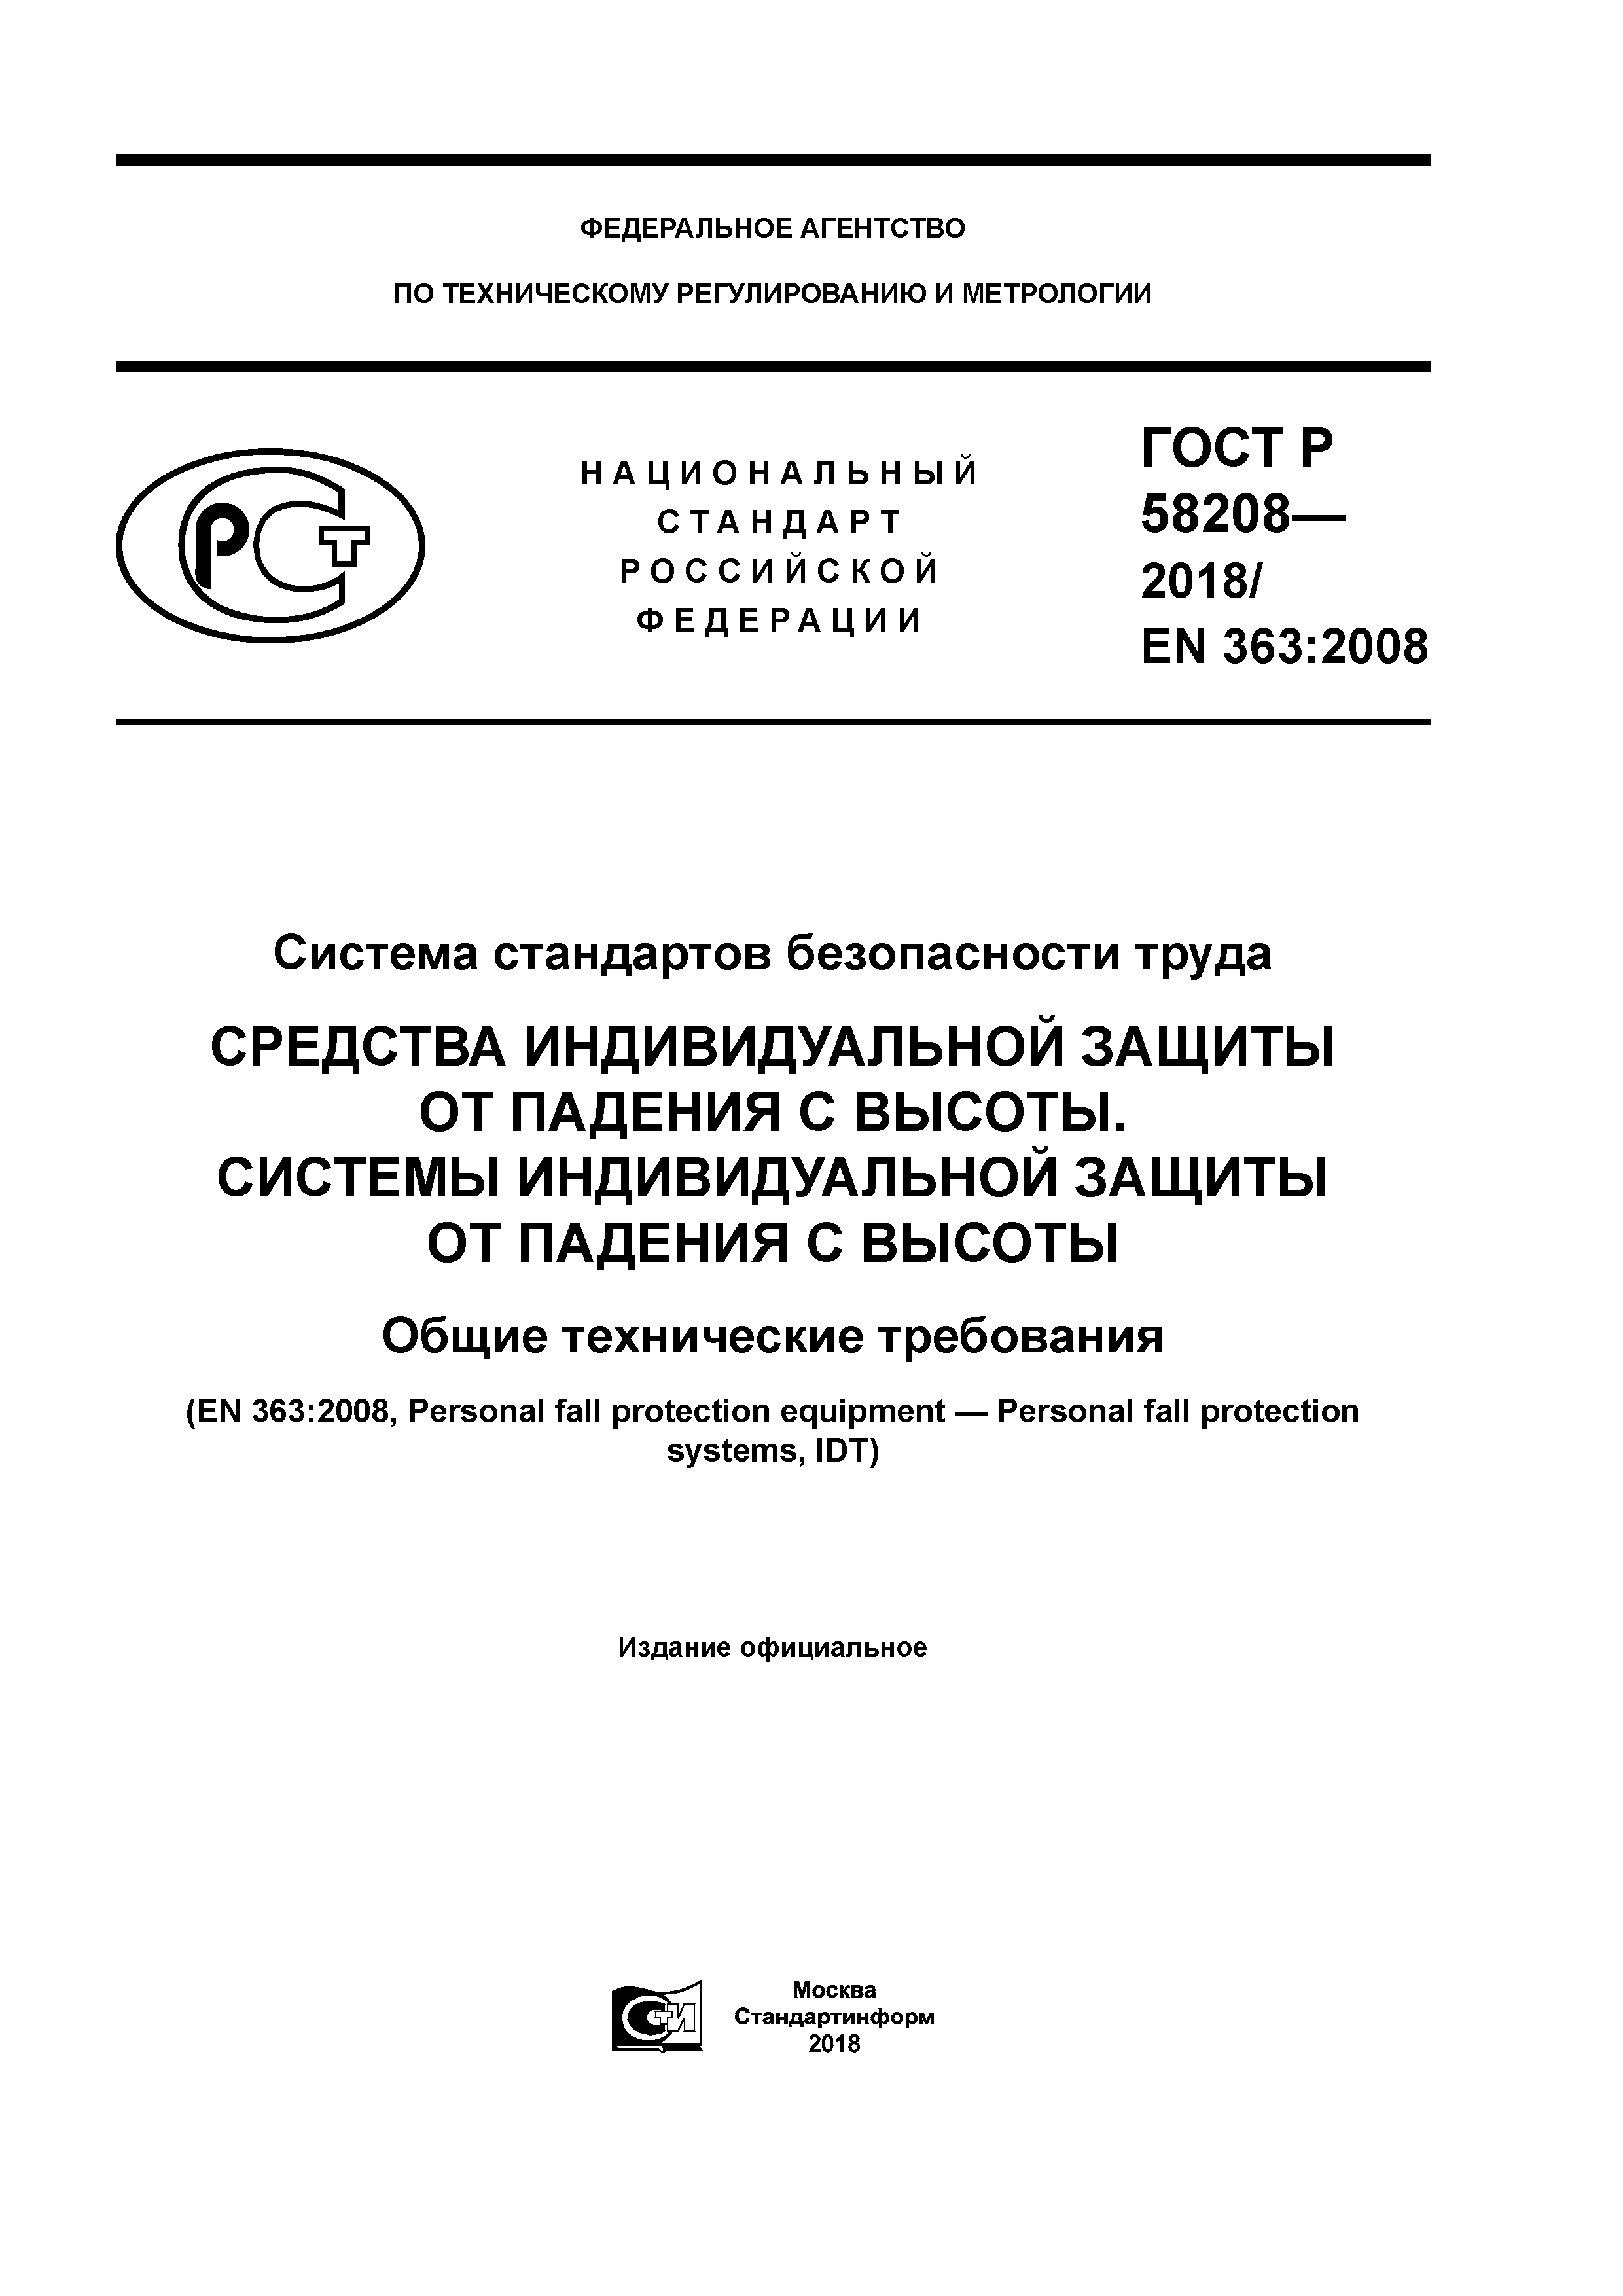 ГОСТ Р 58208-2018